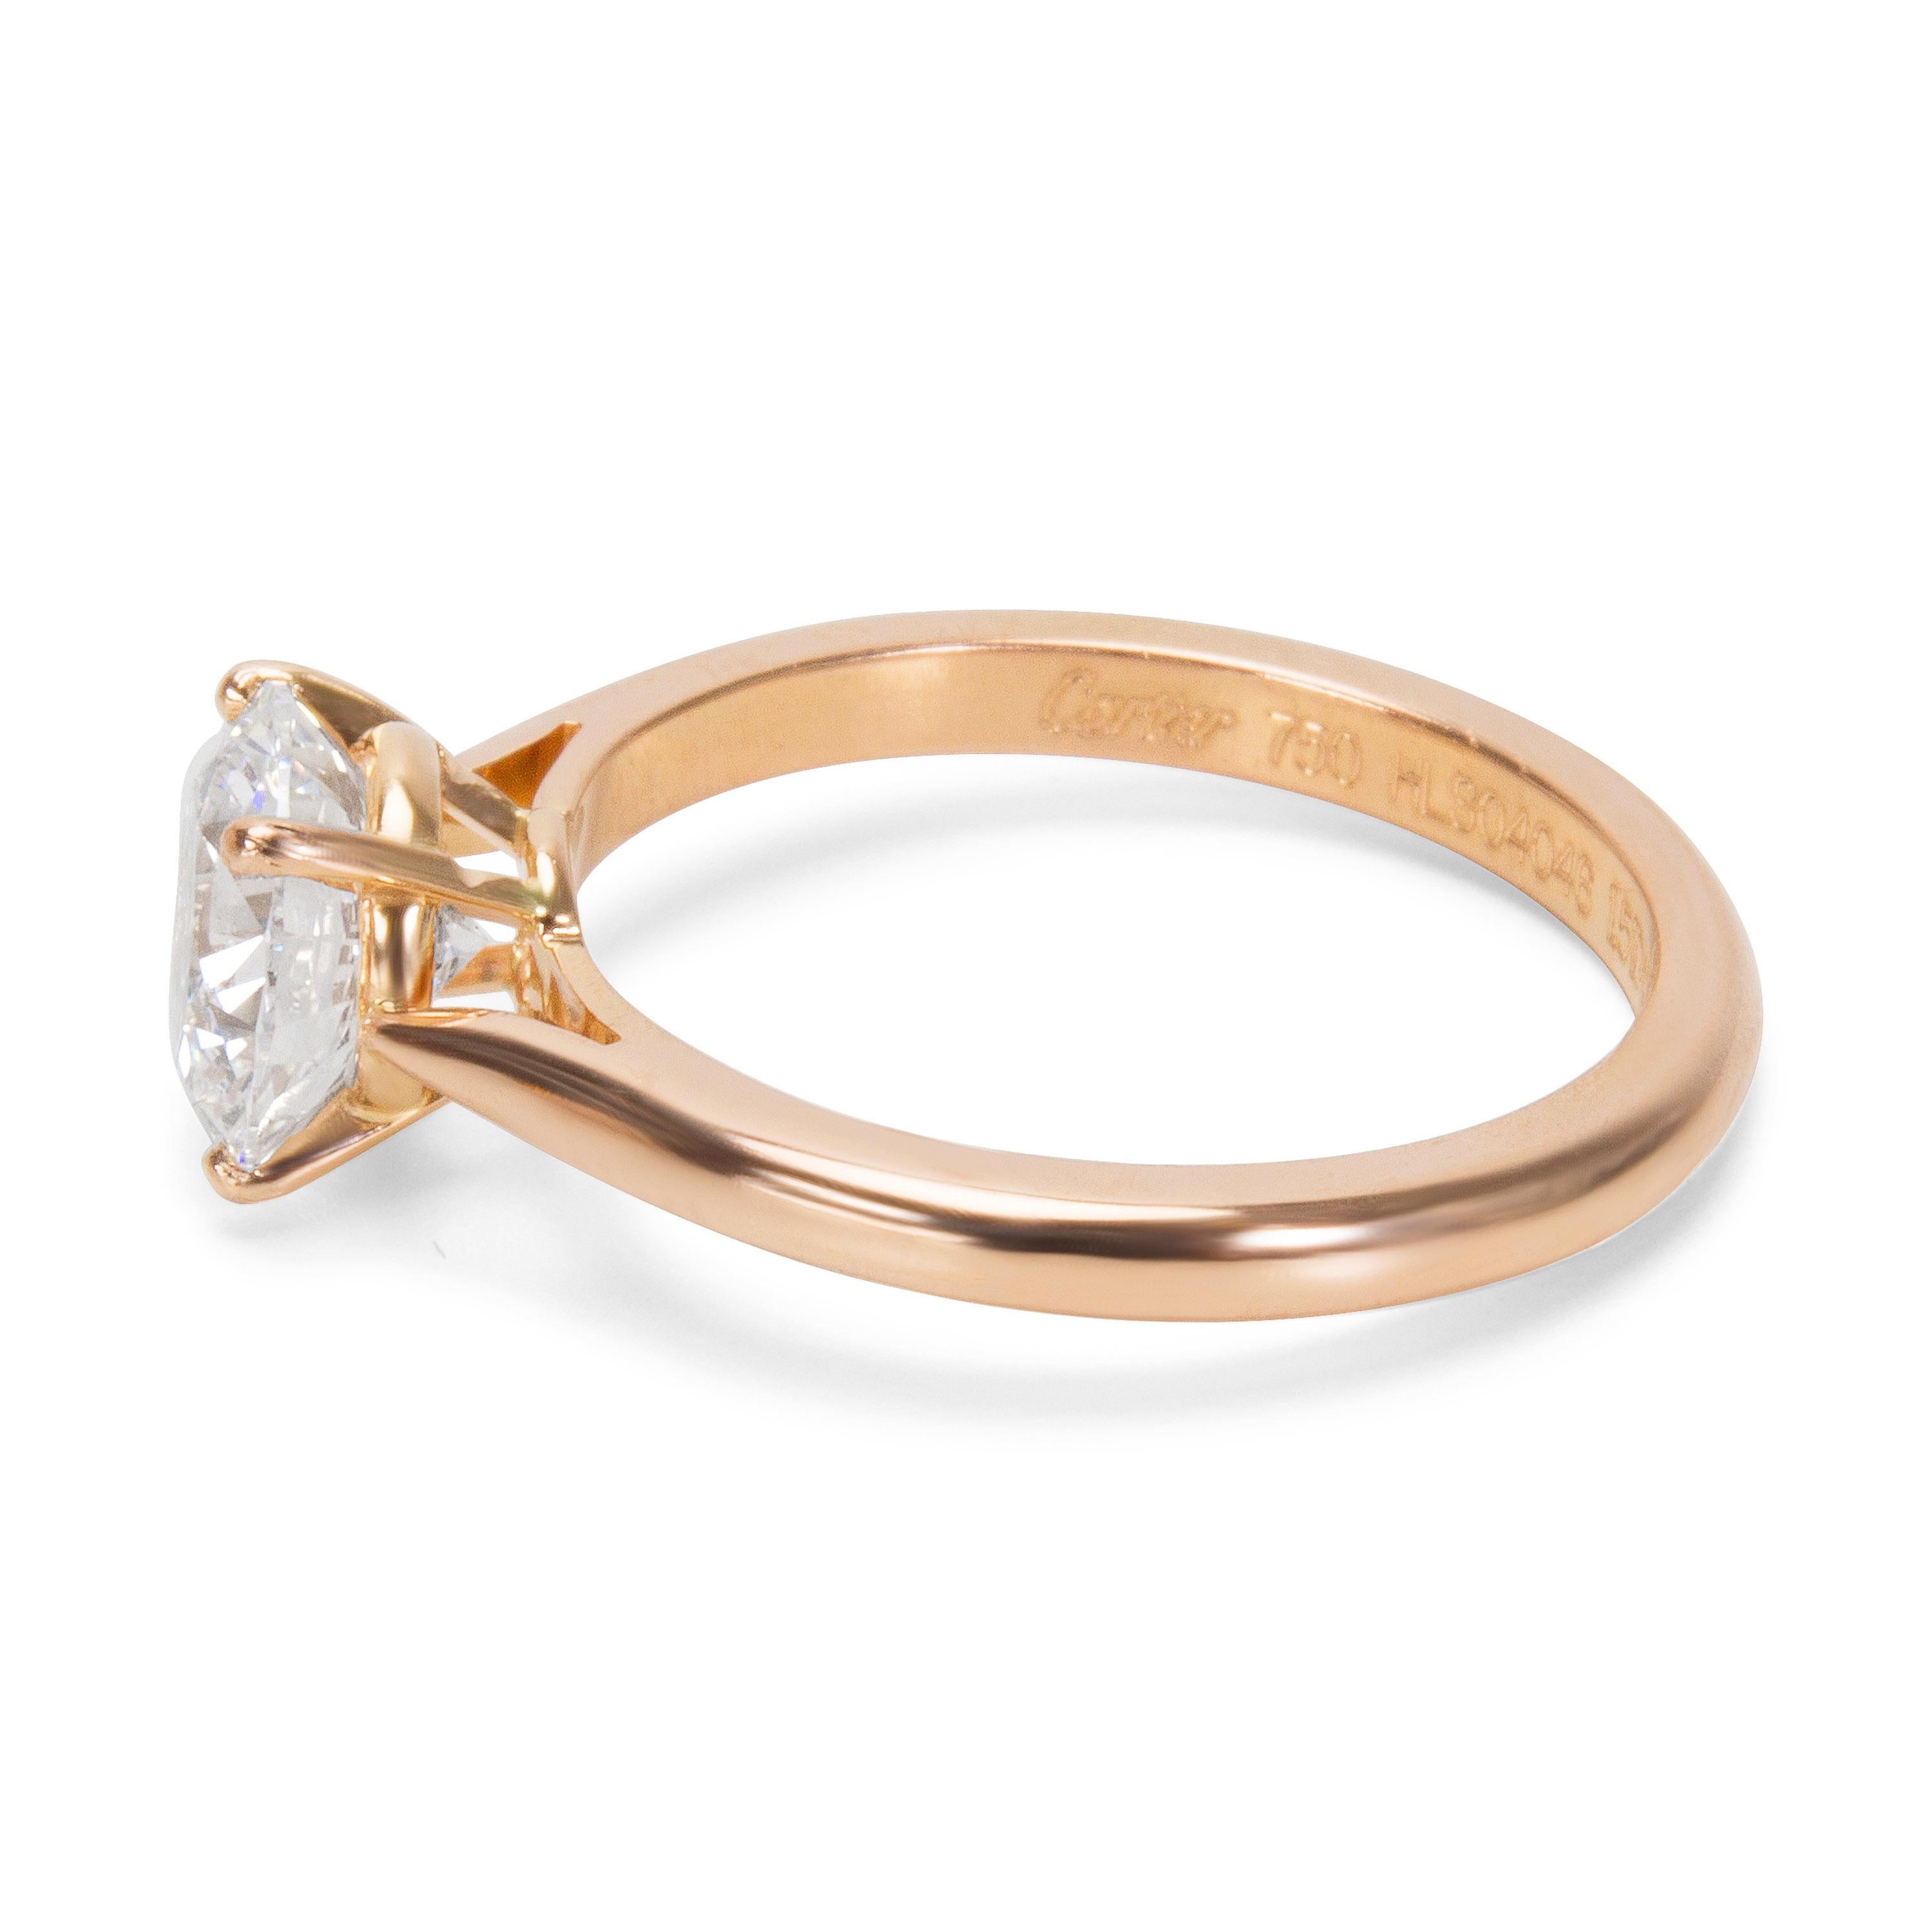 Round Cut Cartier Diamond Engagement Ring in Rose Gold GIA Certified D VVS2 1.51 Carat